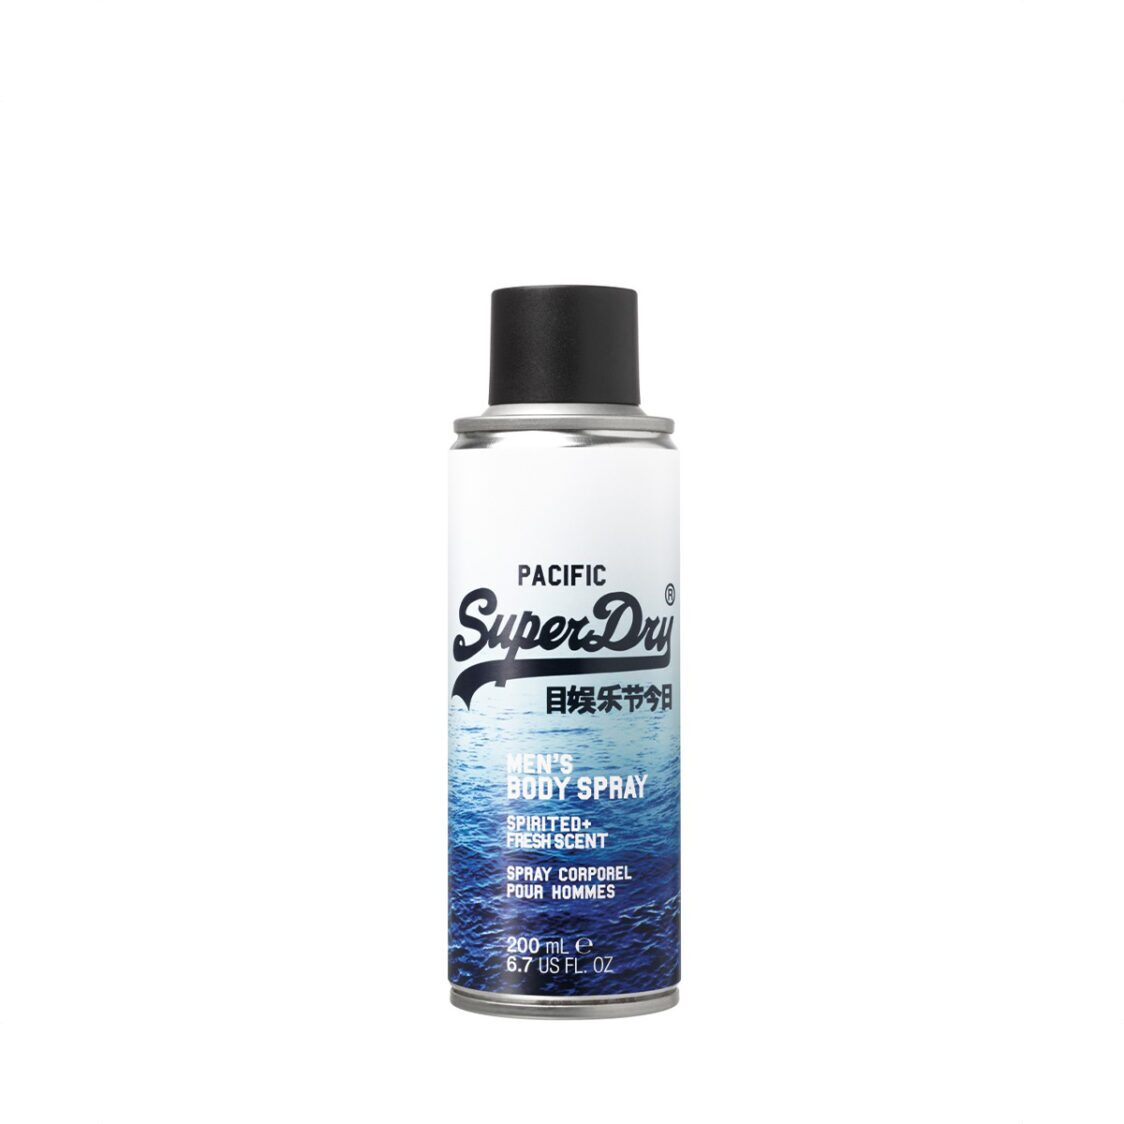 SuperDry Body Spray Pacific 200ml